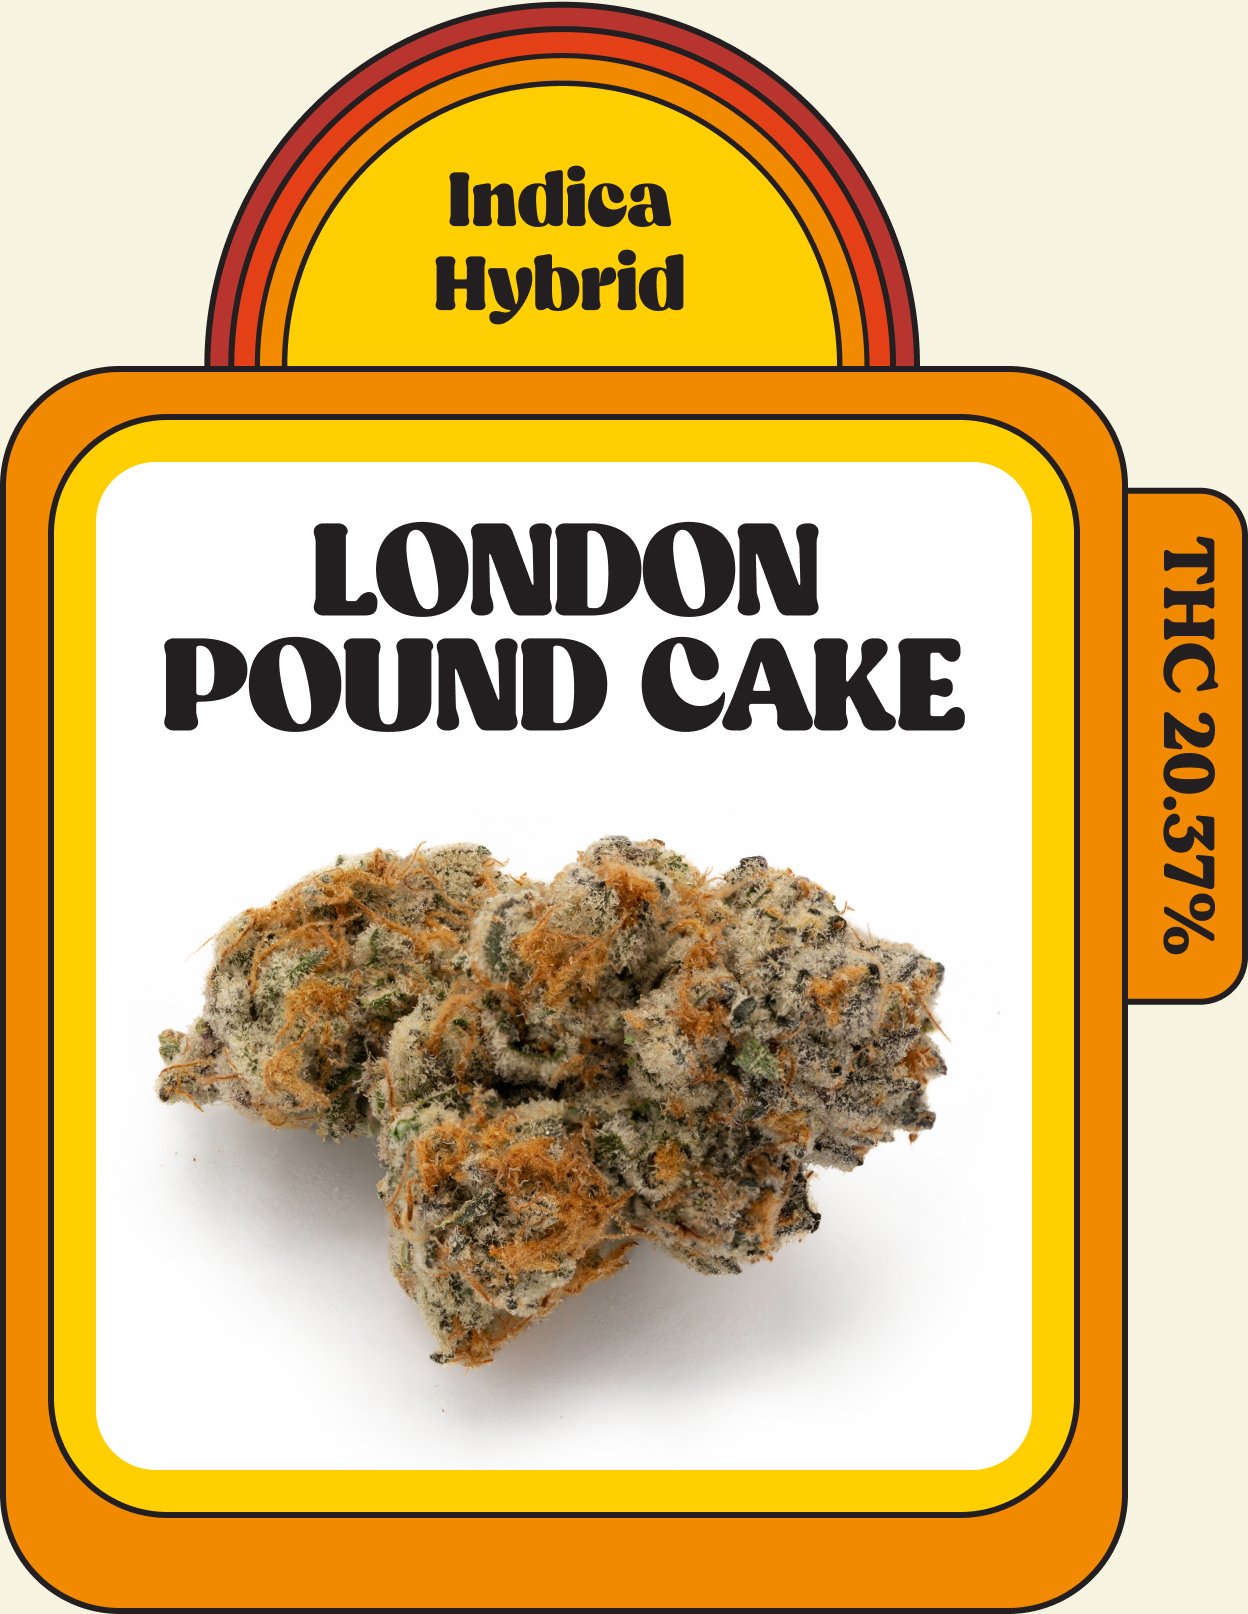 LONDON POUND CAKE